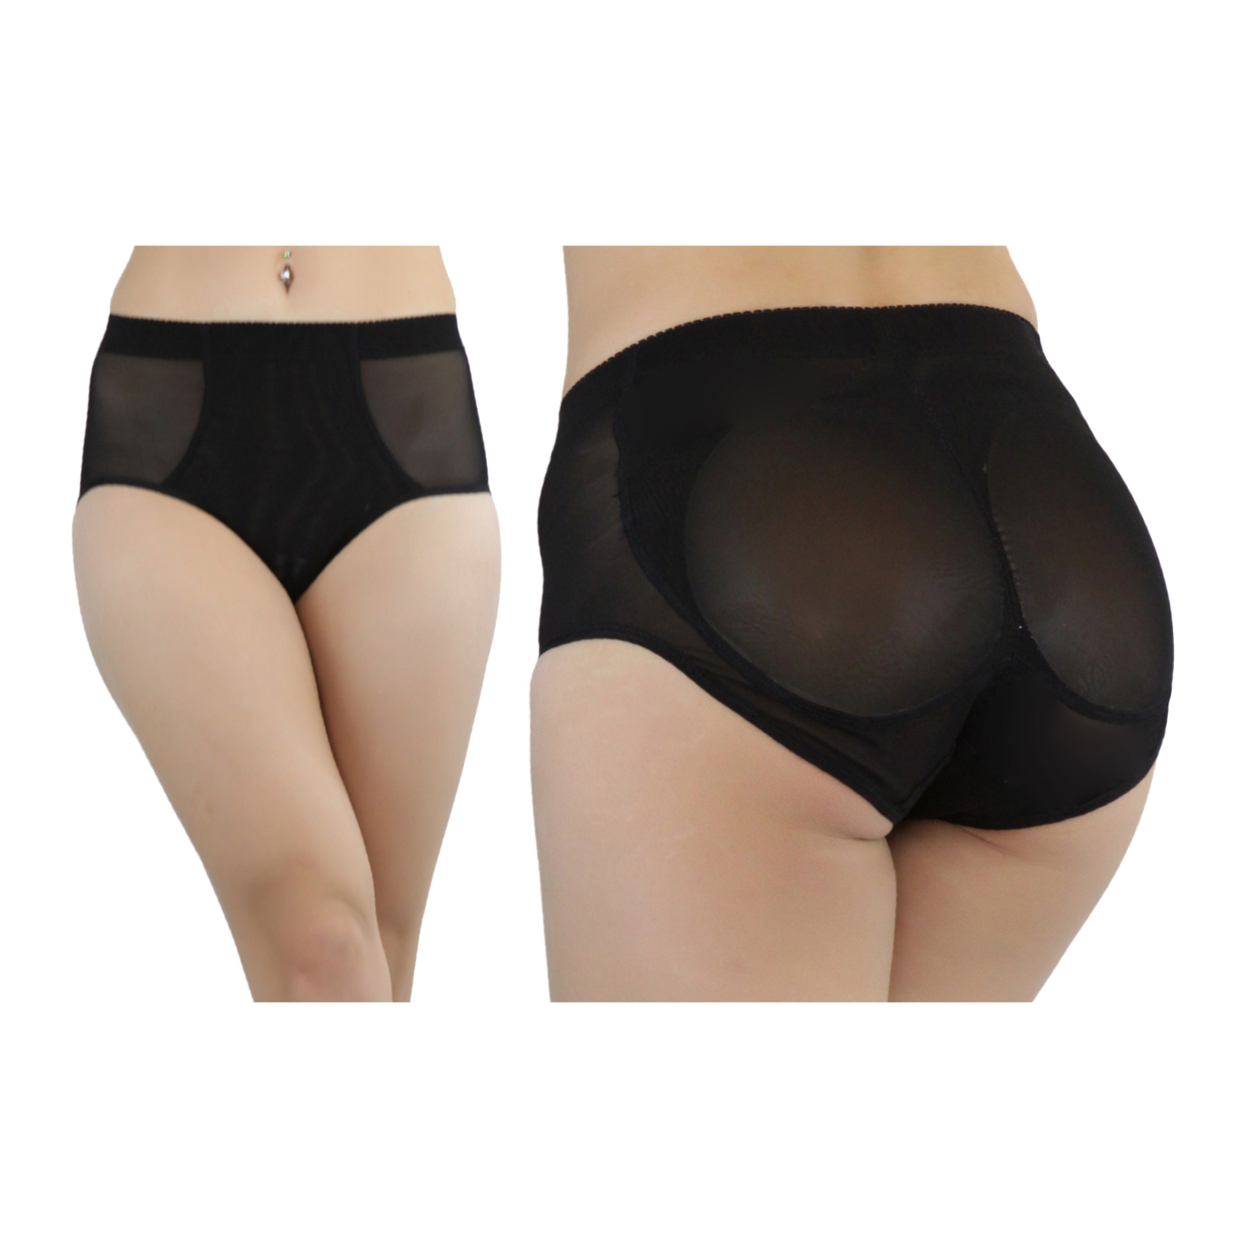 Women's Silicone Instant Buttocks Enhancer Panties - Beige, 3X